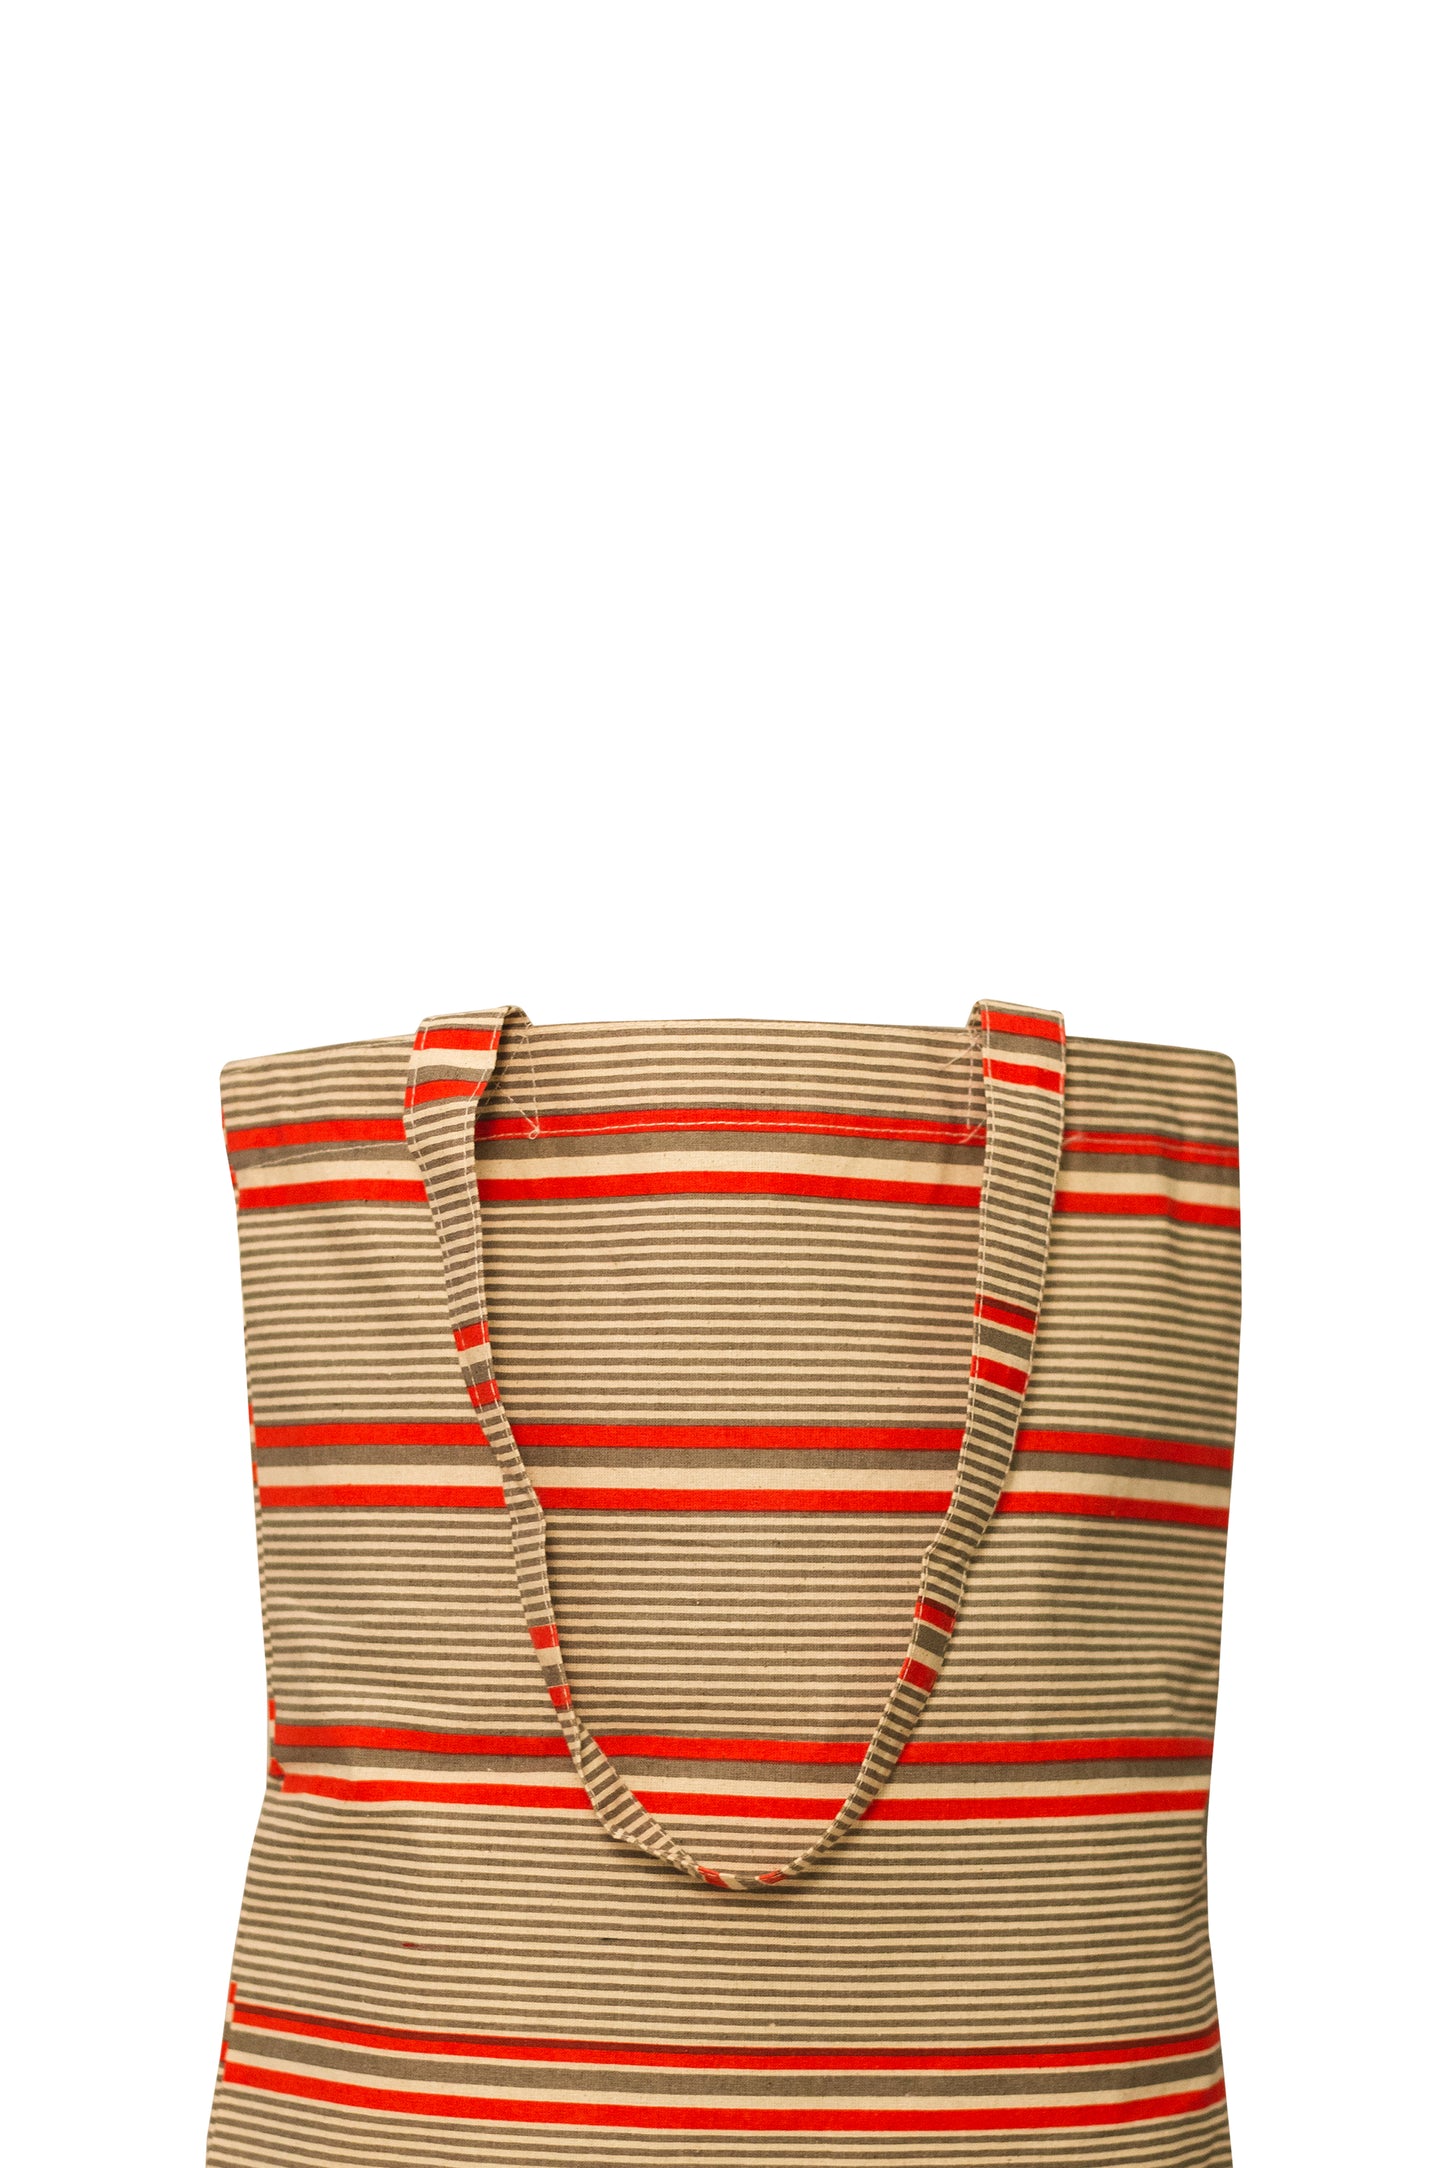 Double Stripes Grey Cotton Shopping Tote Bag